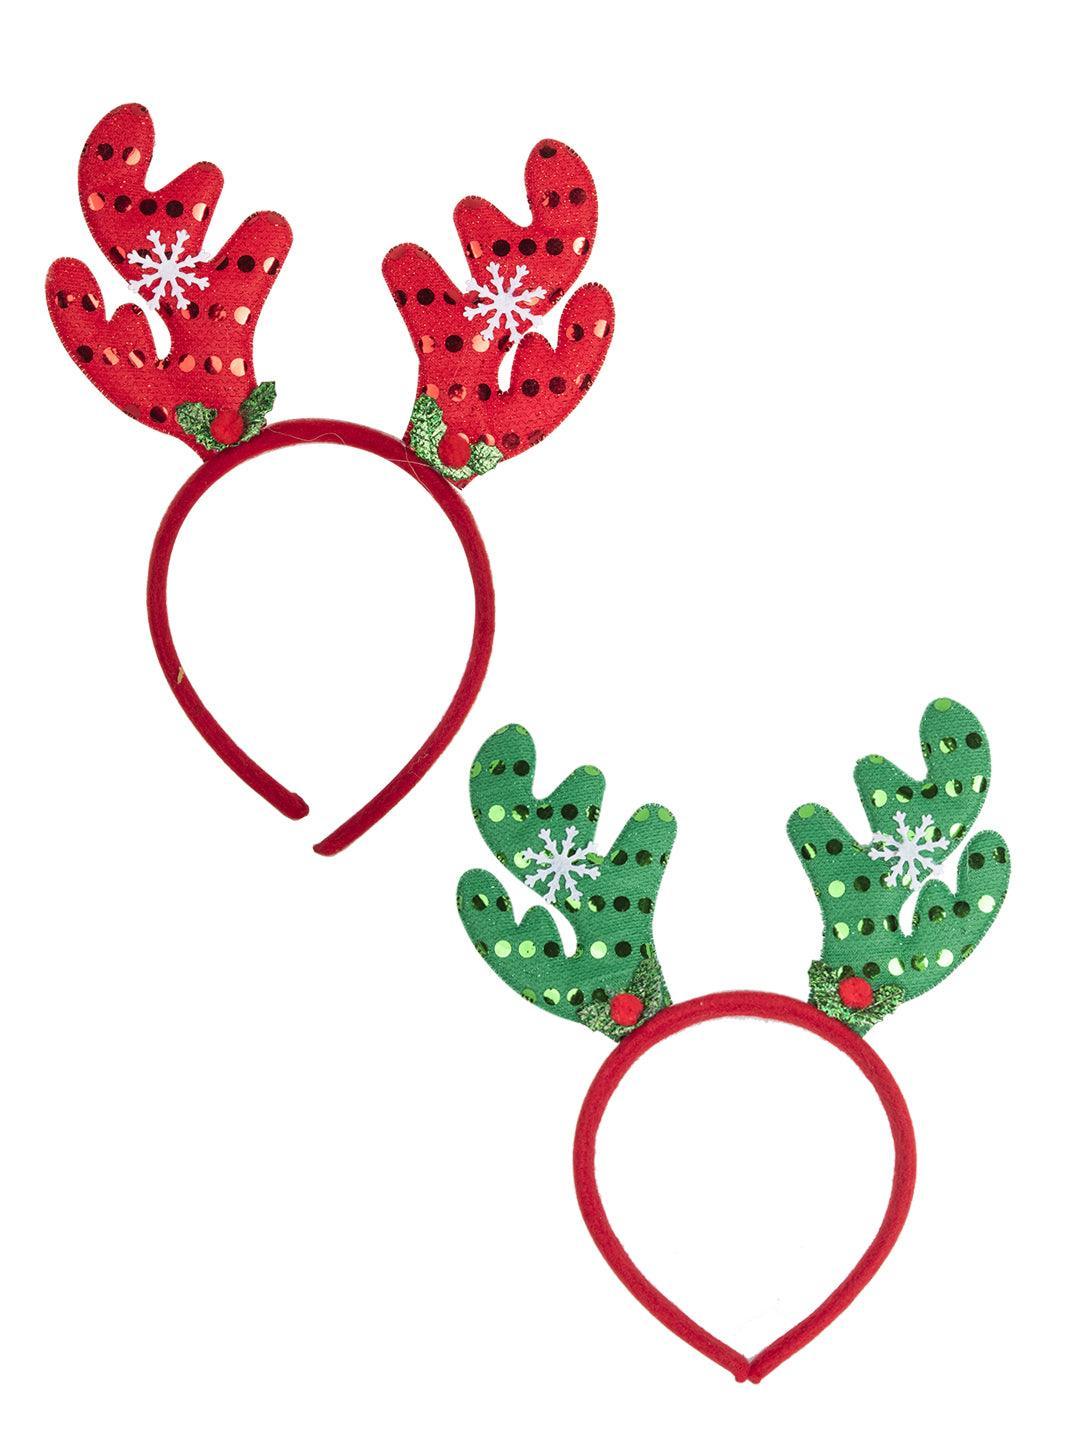 Reindeer Horn Red & Green (With Snowflakes) - Christmas Reindeer Antlers Head Band Set Of 2 Pcs - MARKET 99